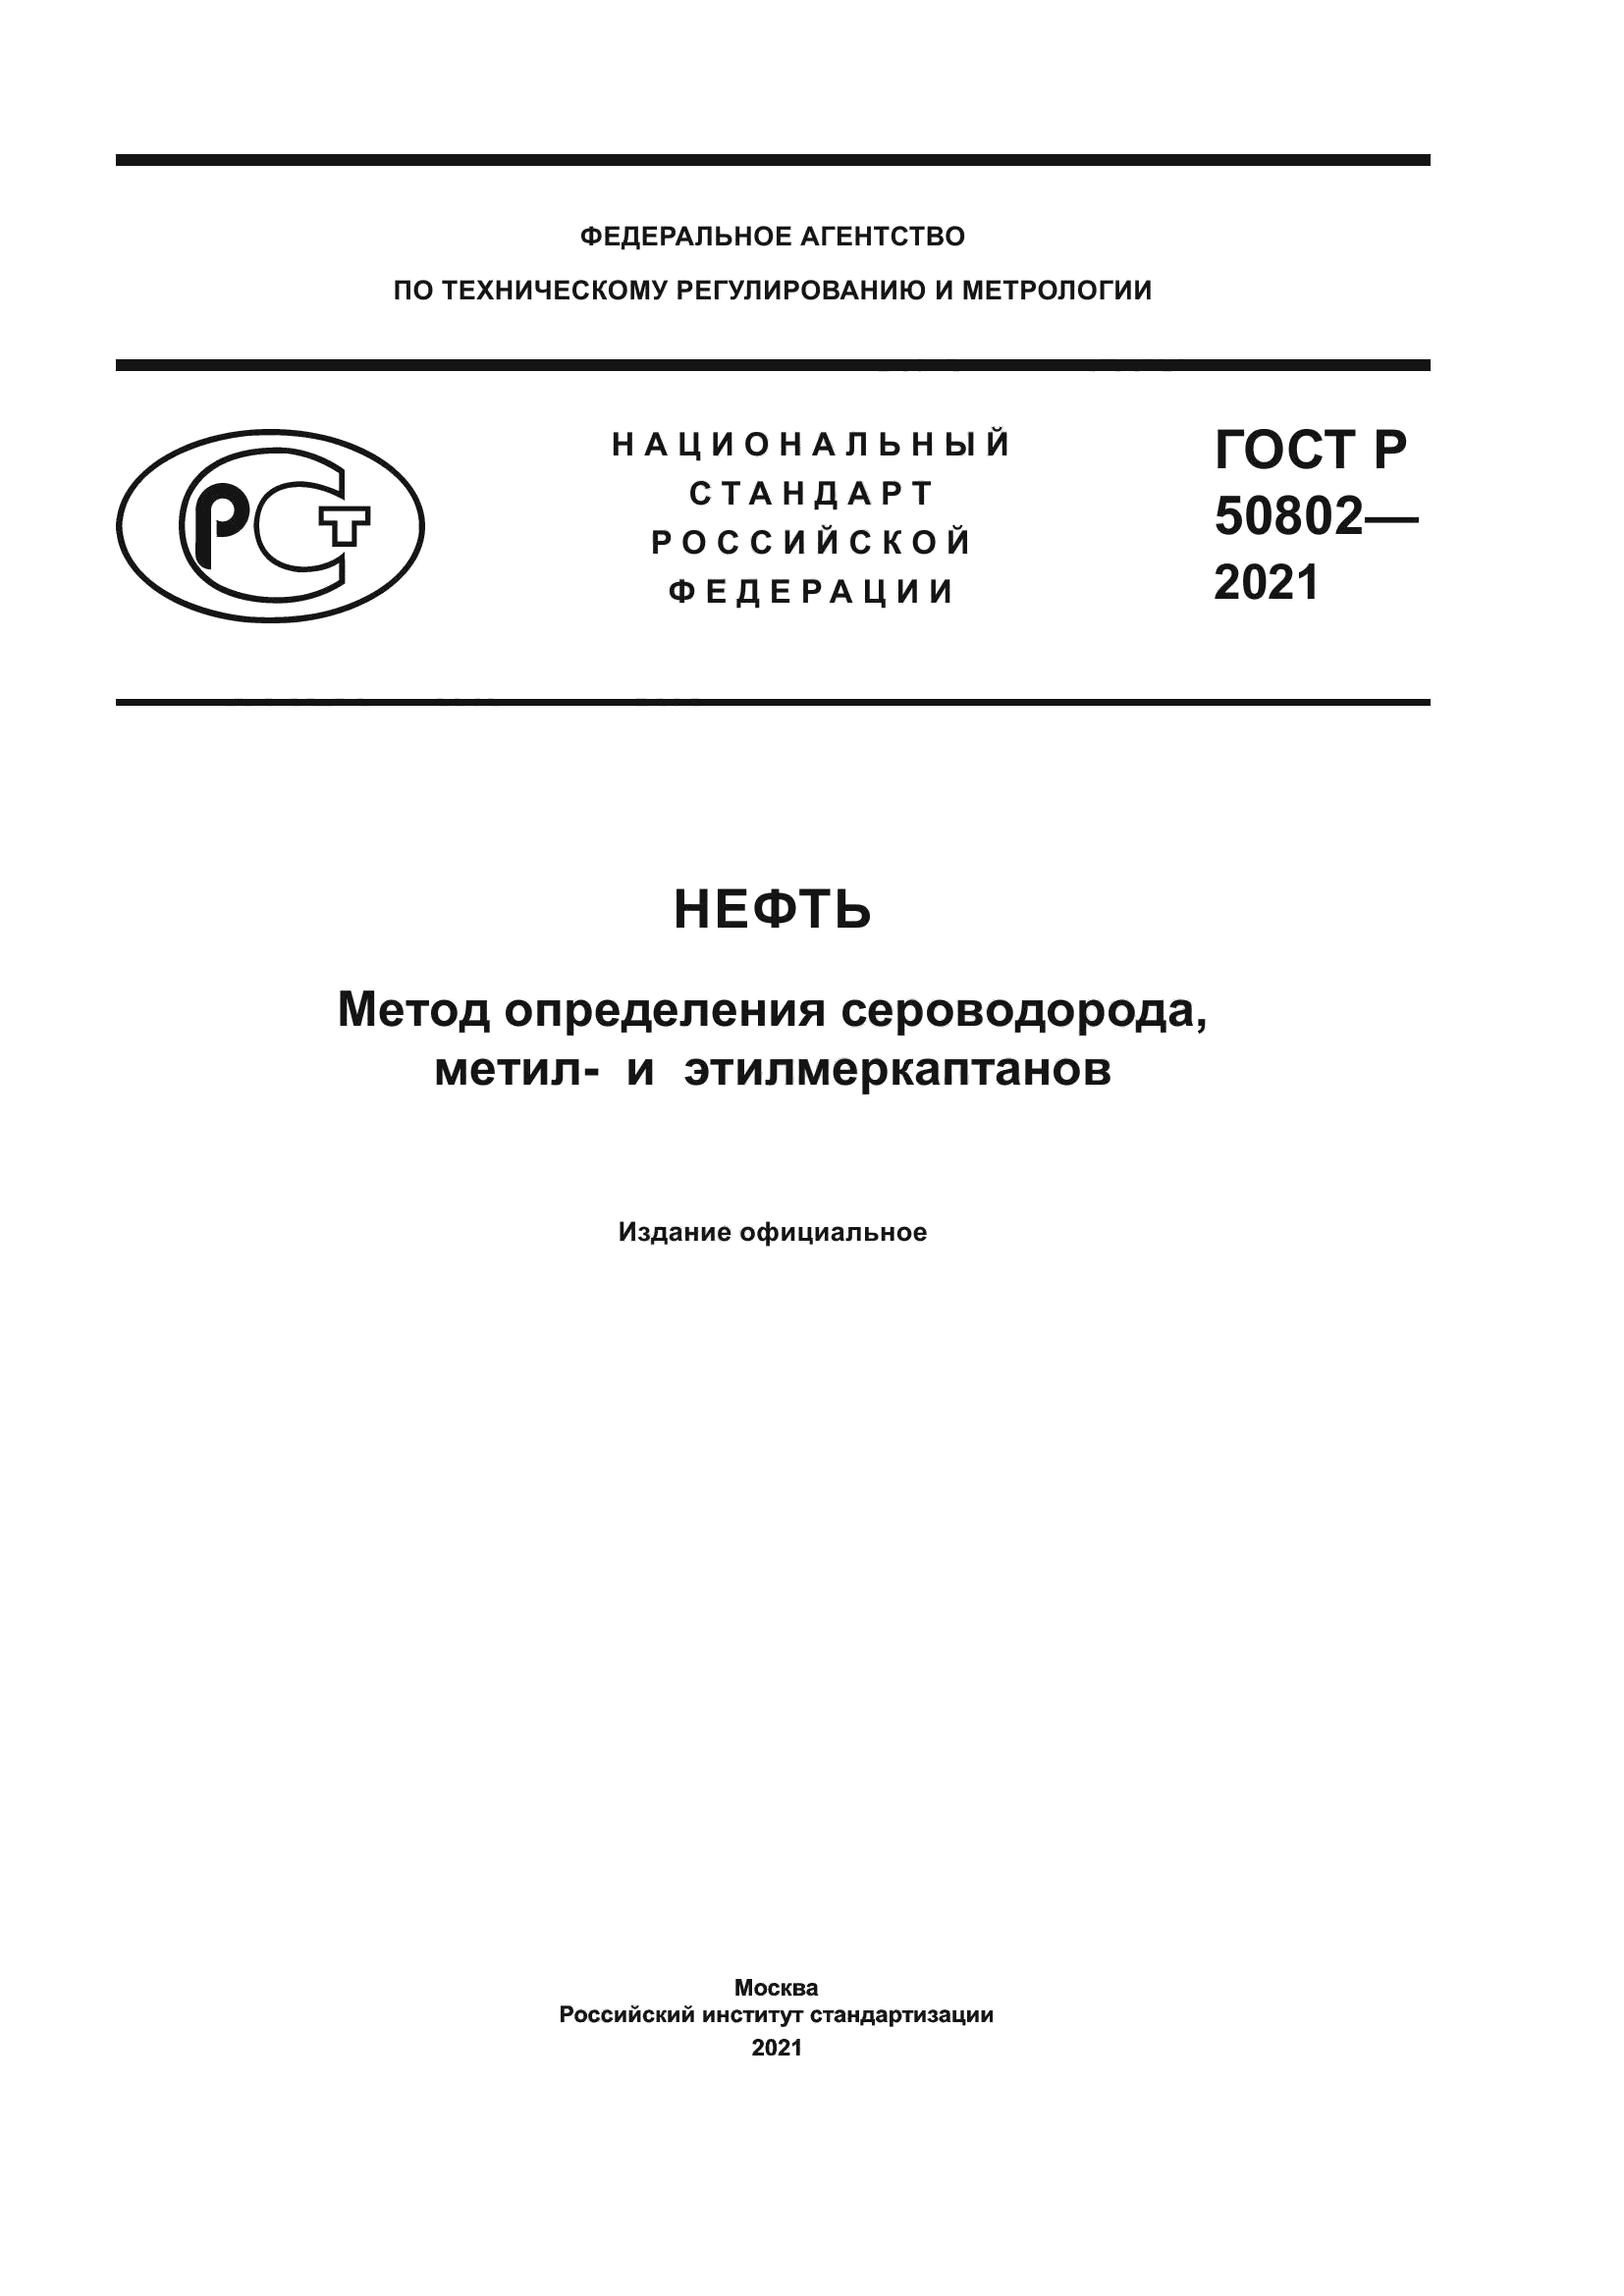 ГОСТ Р 50802-2021